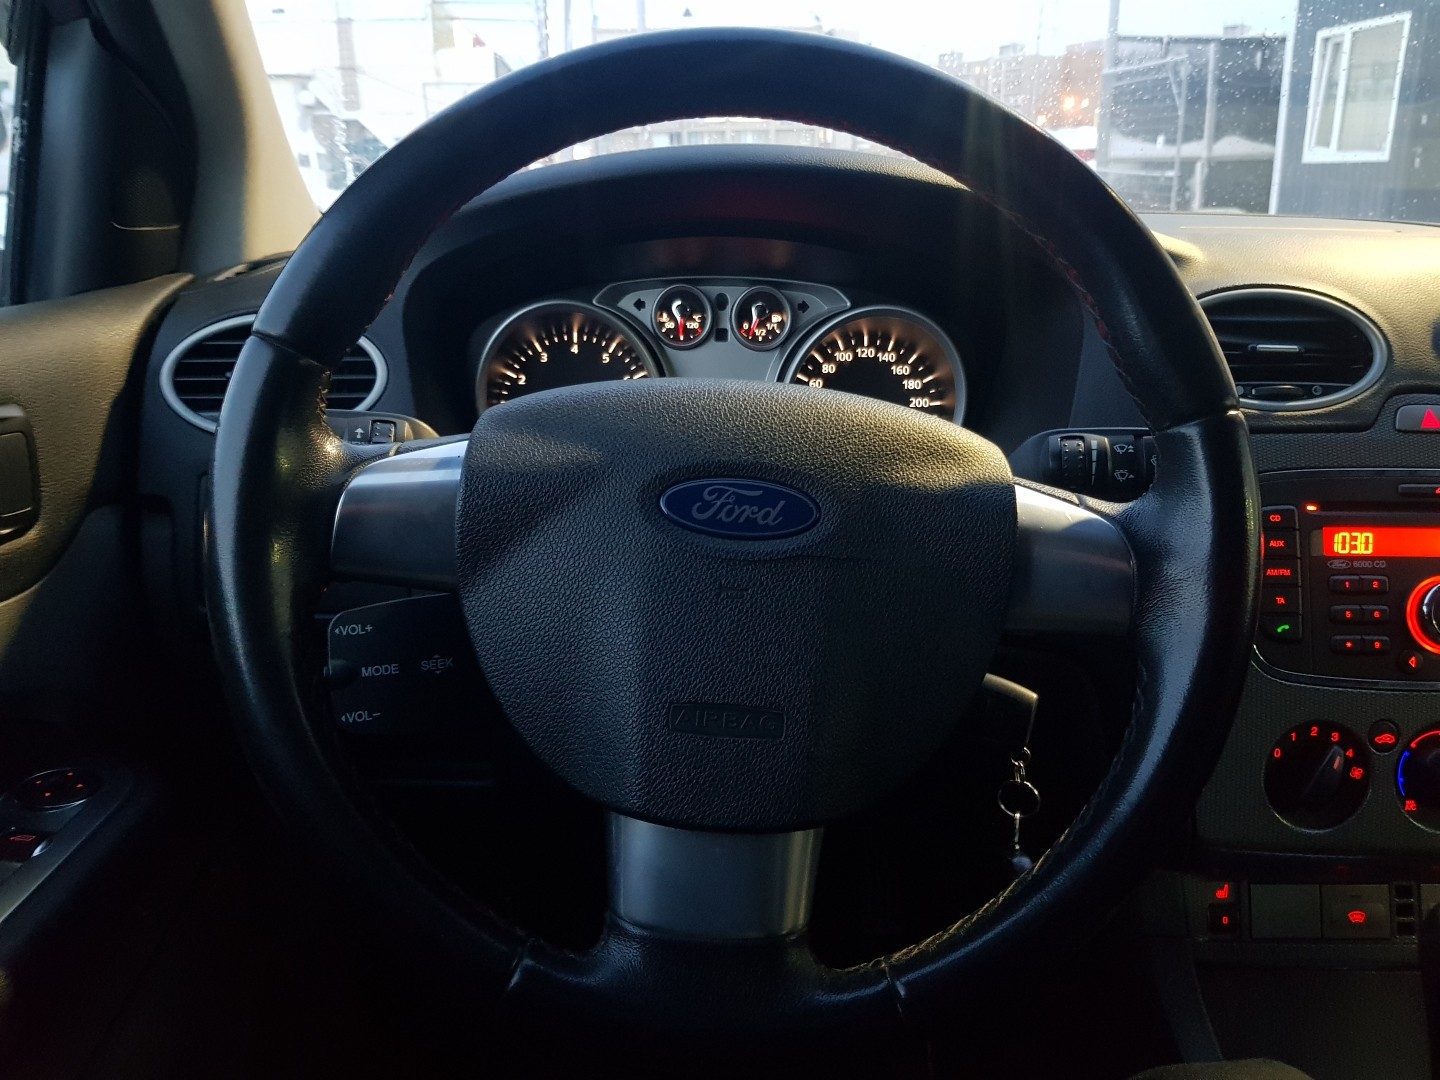 Ford Ford Focus, 2010 г.в., пробег 153 300 км, цена, фото, Мурманск